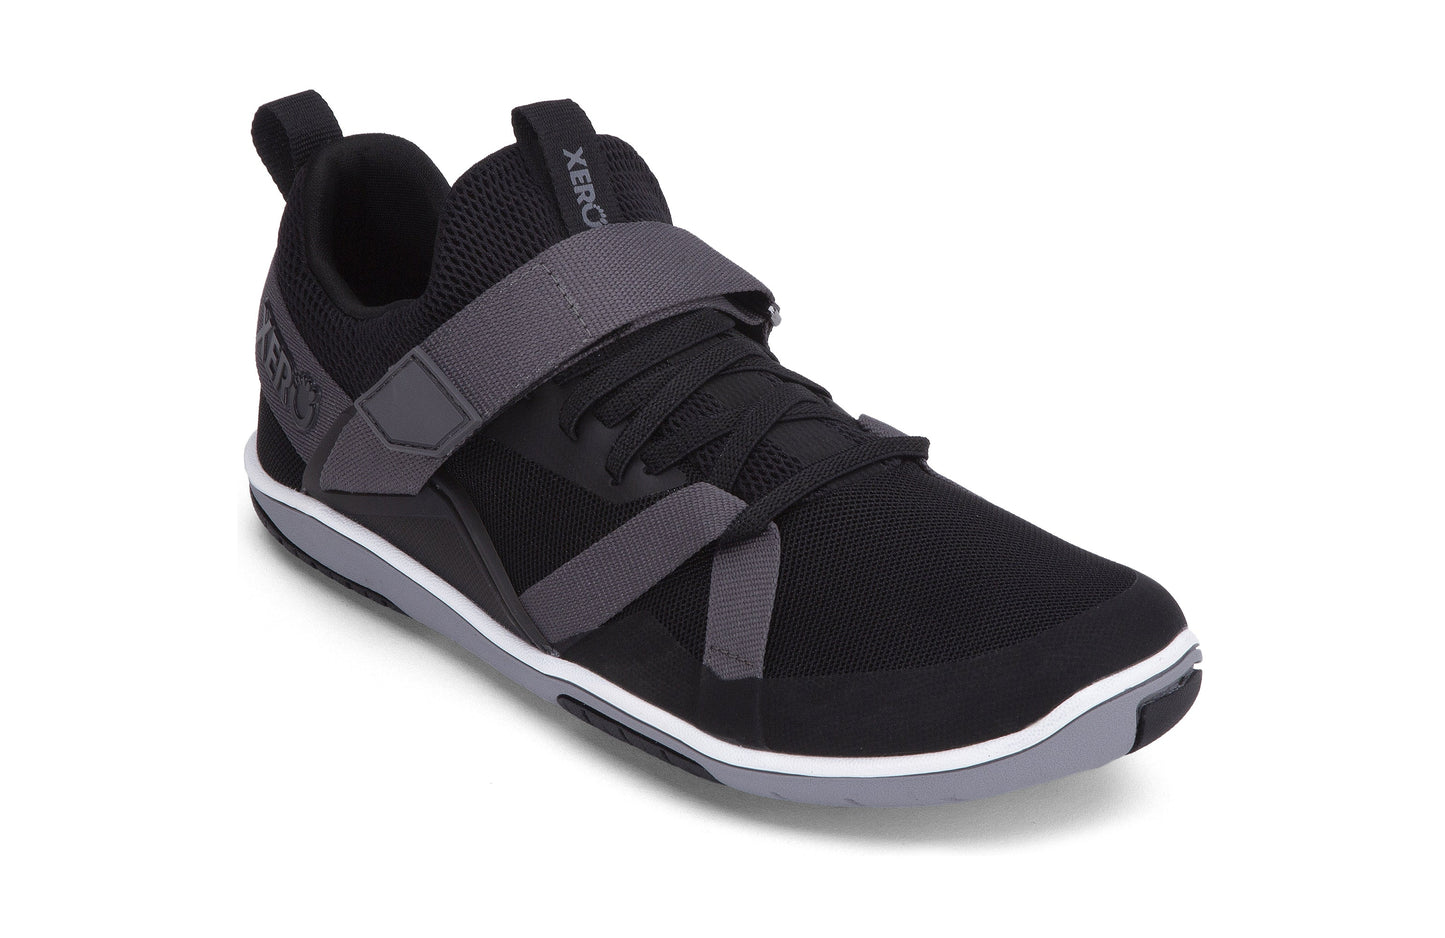 Xero Shoes Forza Trainer Womens barfods træningssko til kvinder i farven black, vinklet